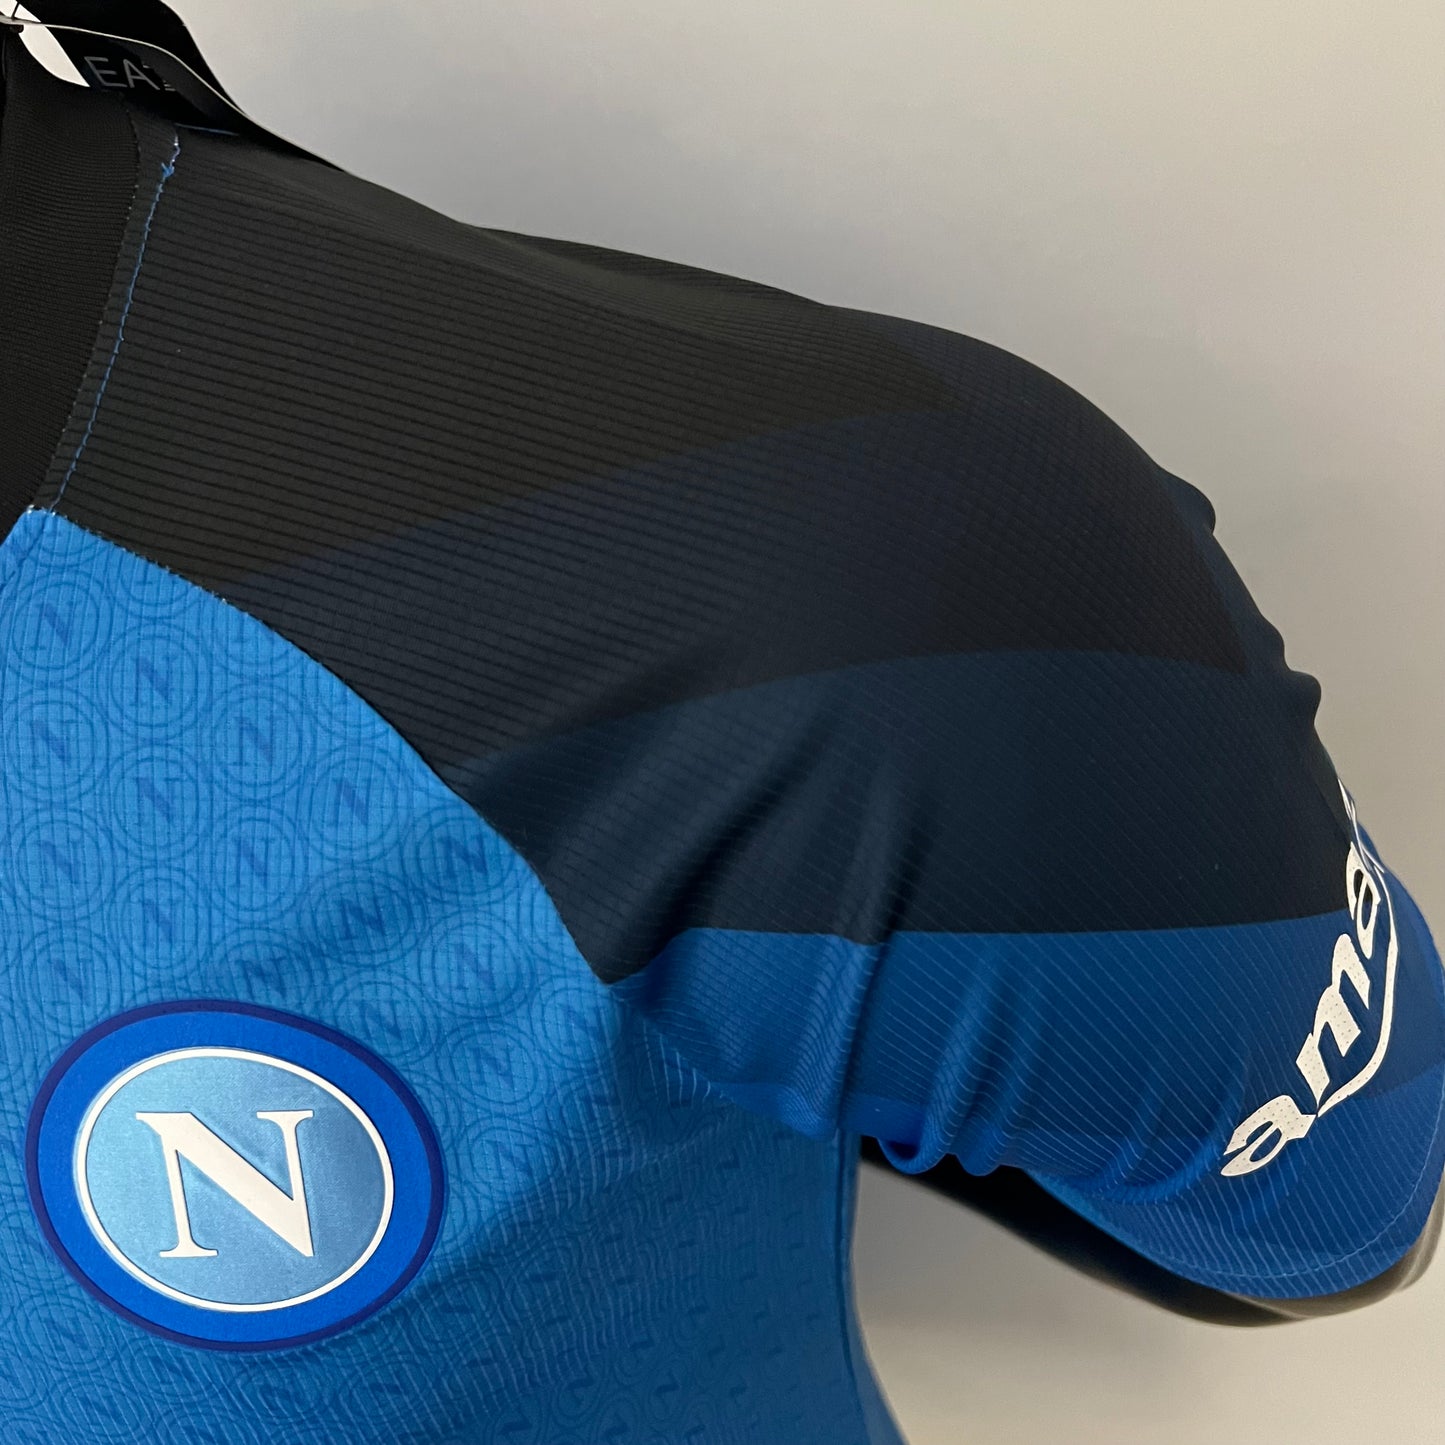 Napoli 2022/2023 Home Kit - Player Version